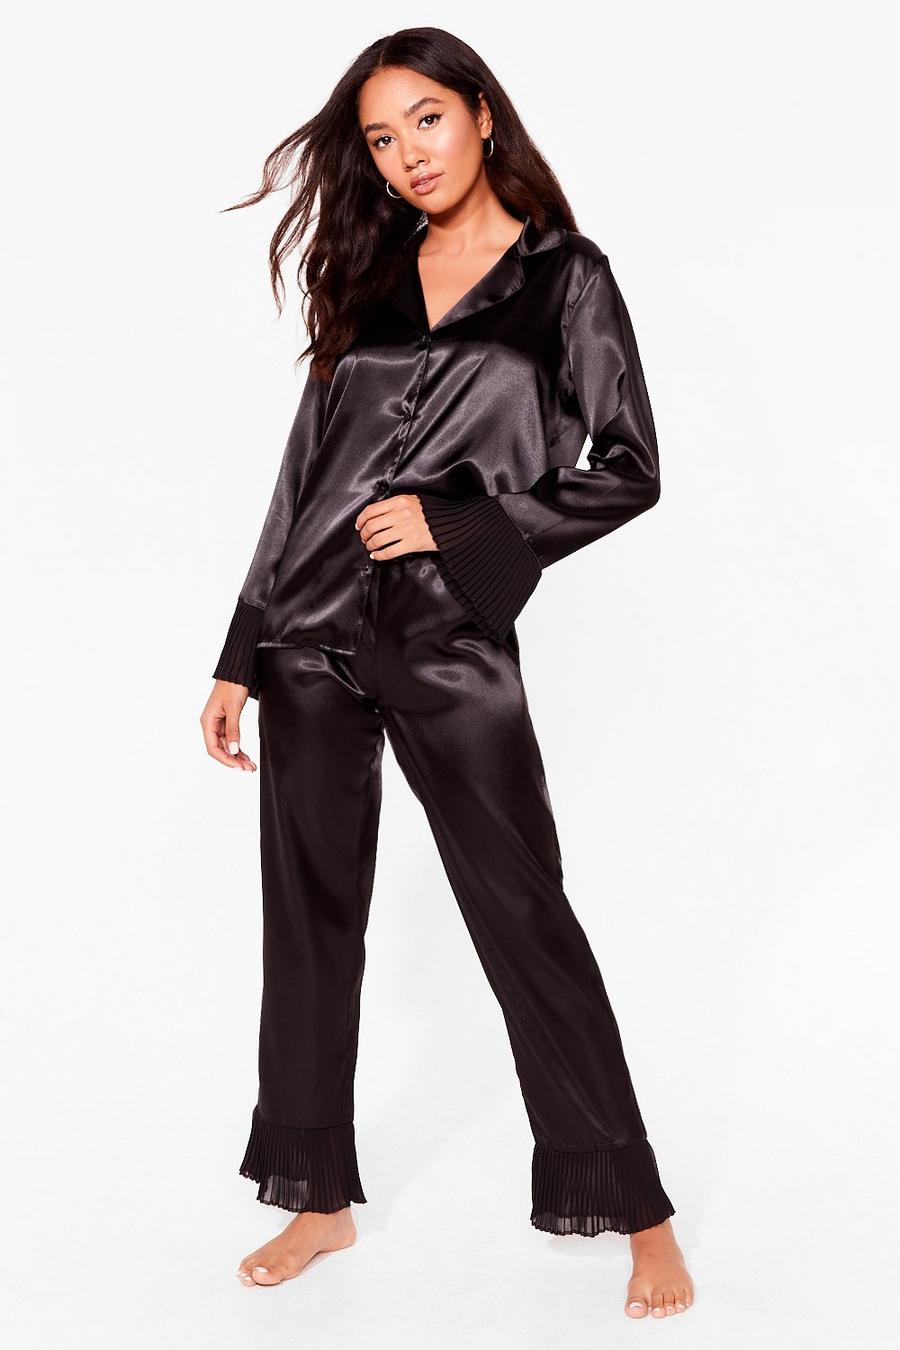 Black Get Chiffon With It Petite Satin Trousers Pyjama Set